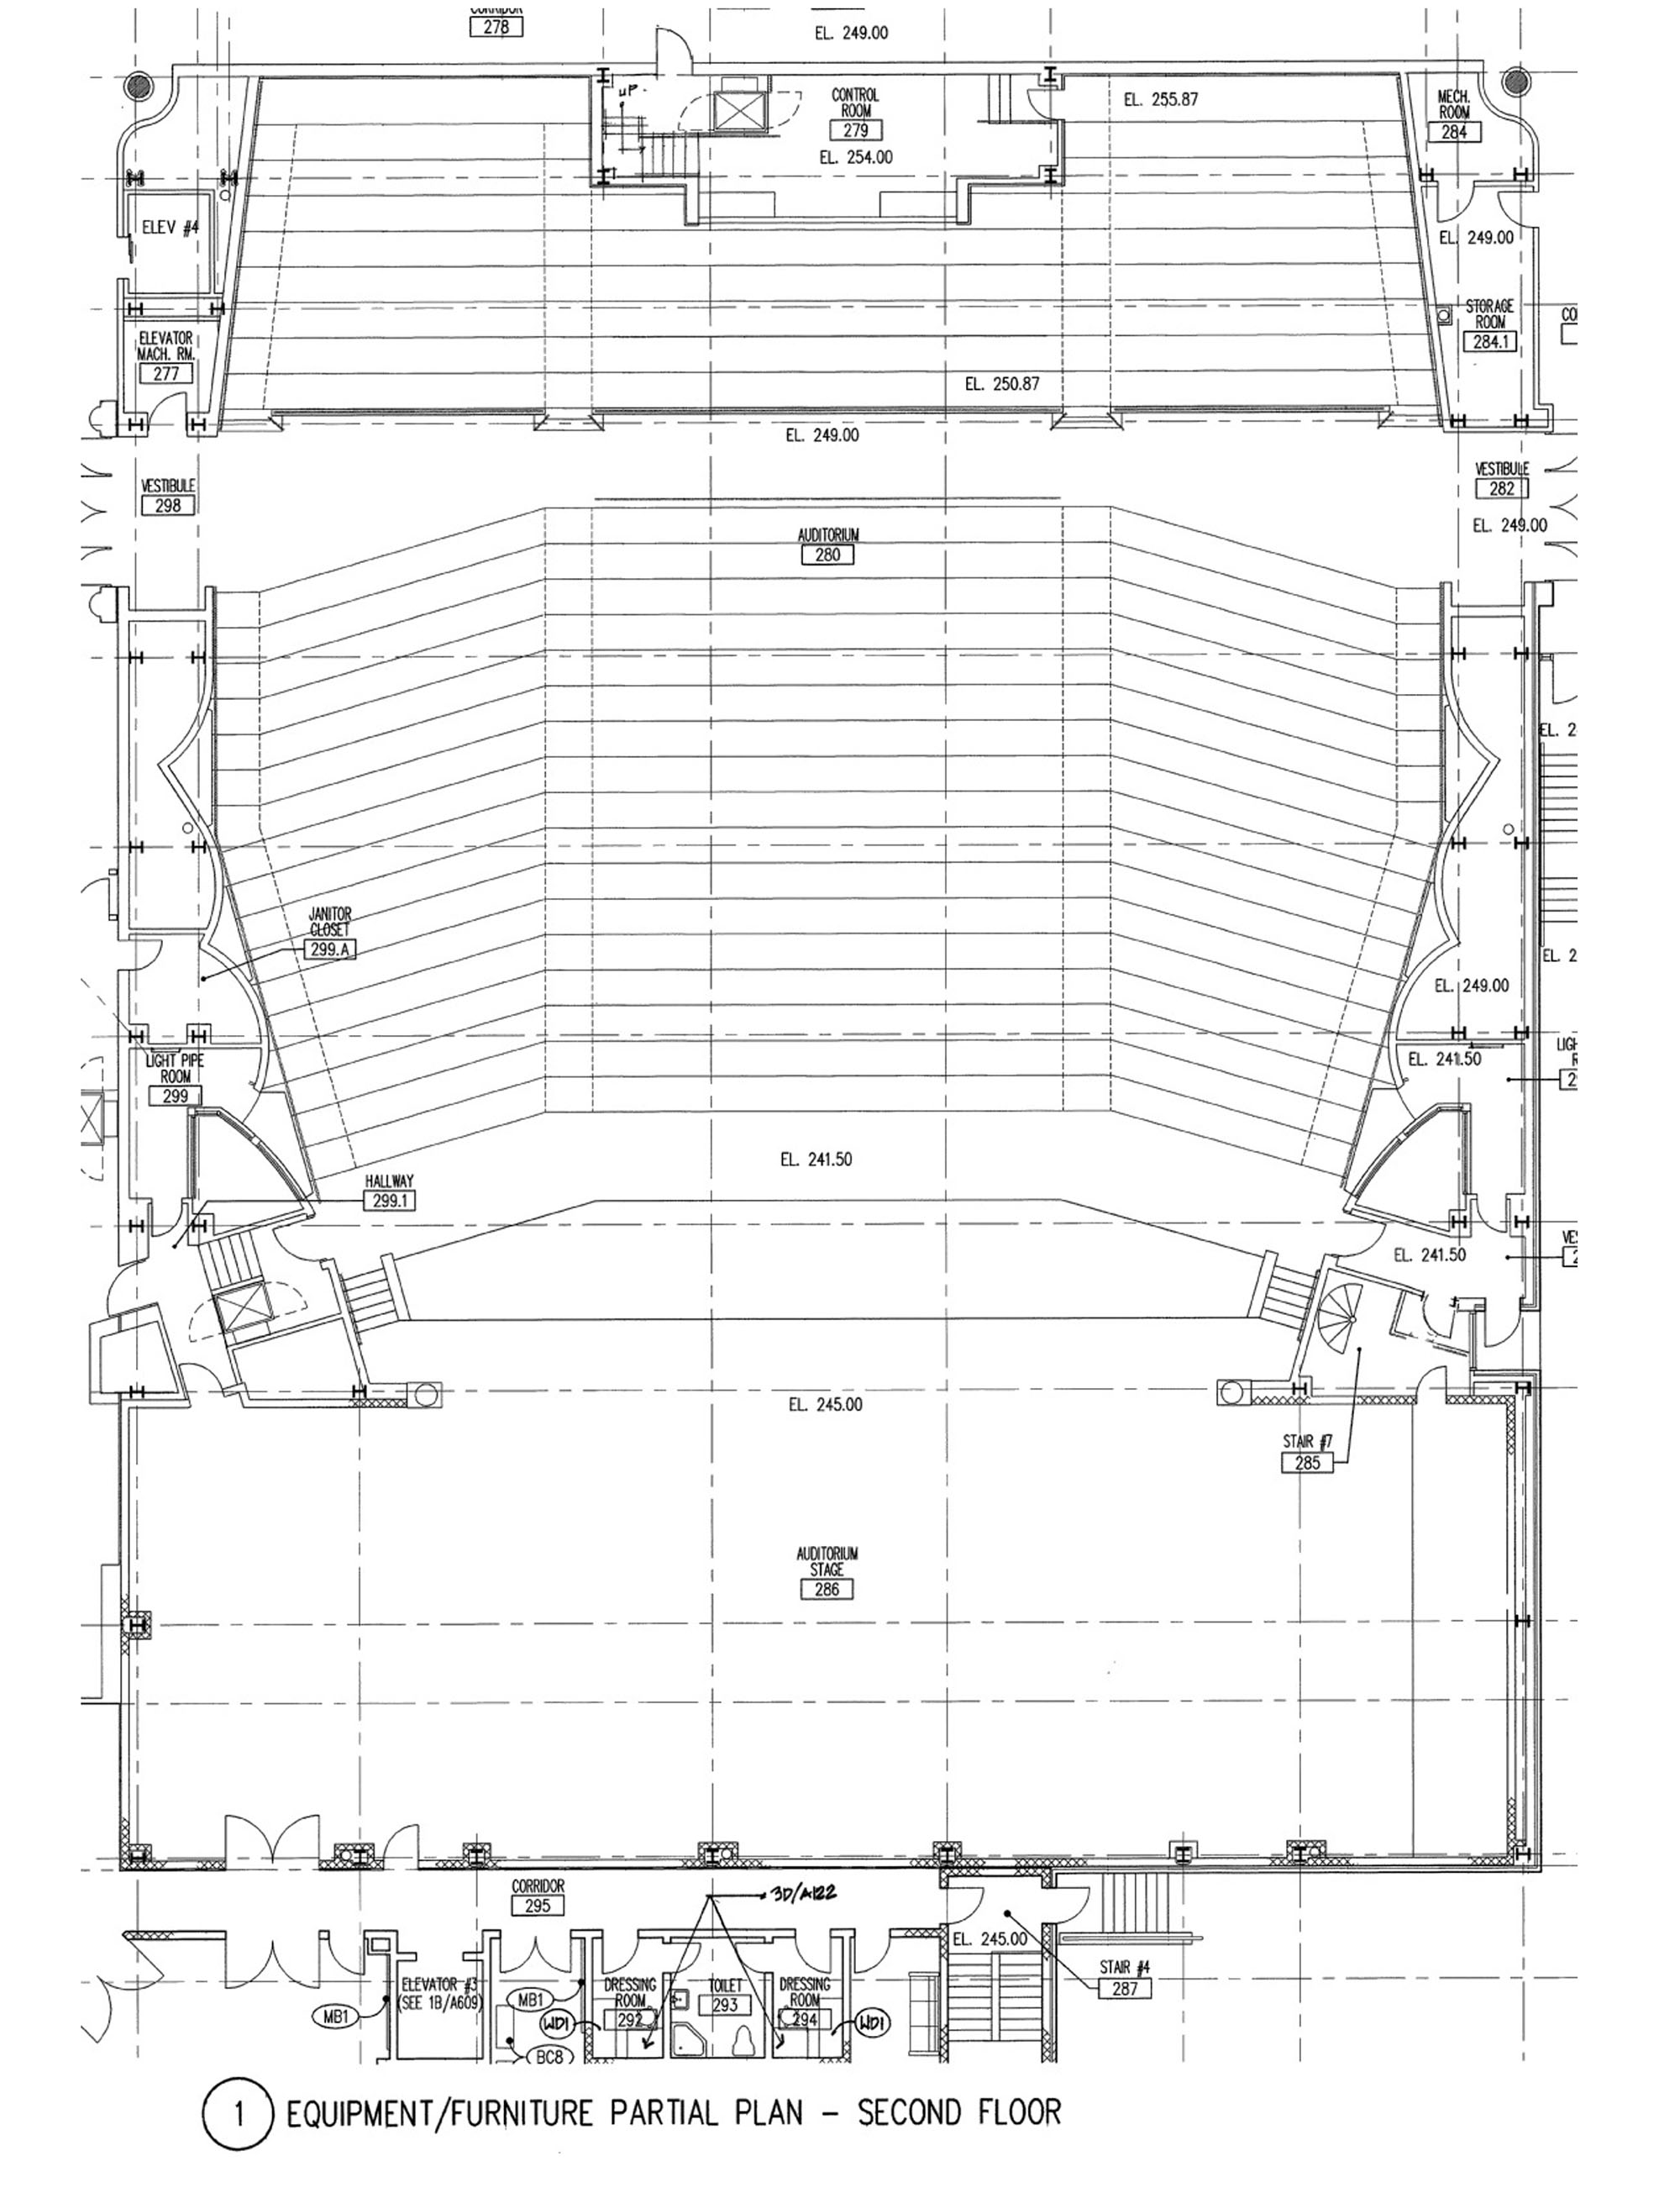 Equipment/Furniture Partial Plan - Second Floor